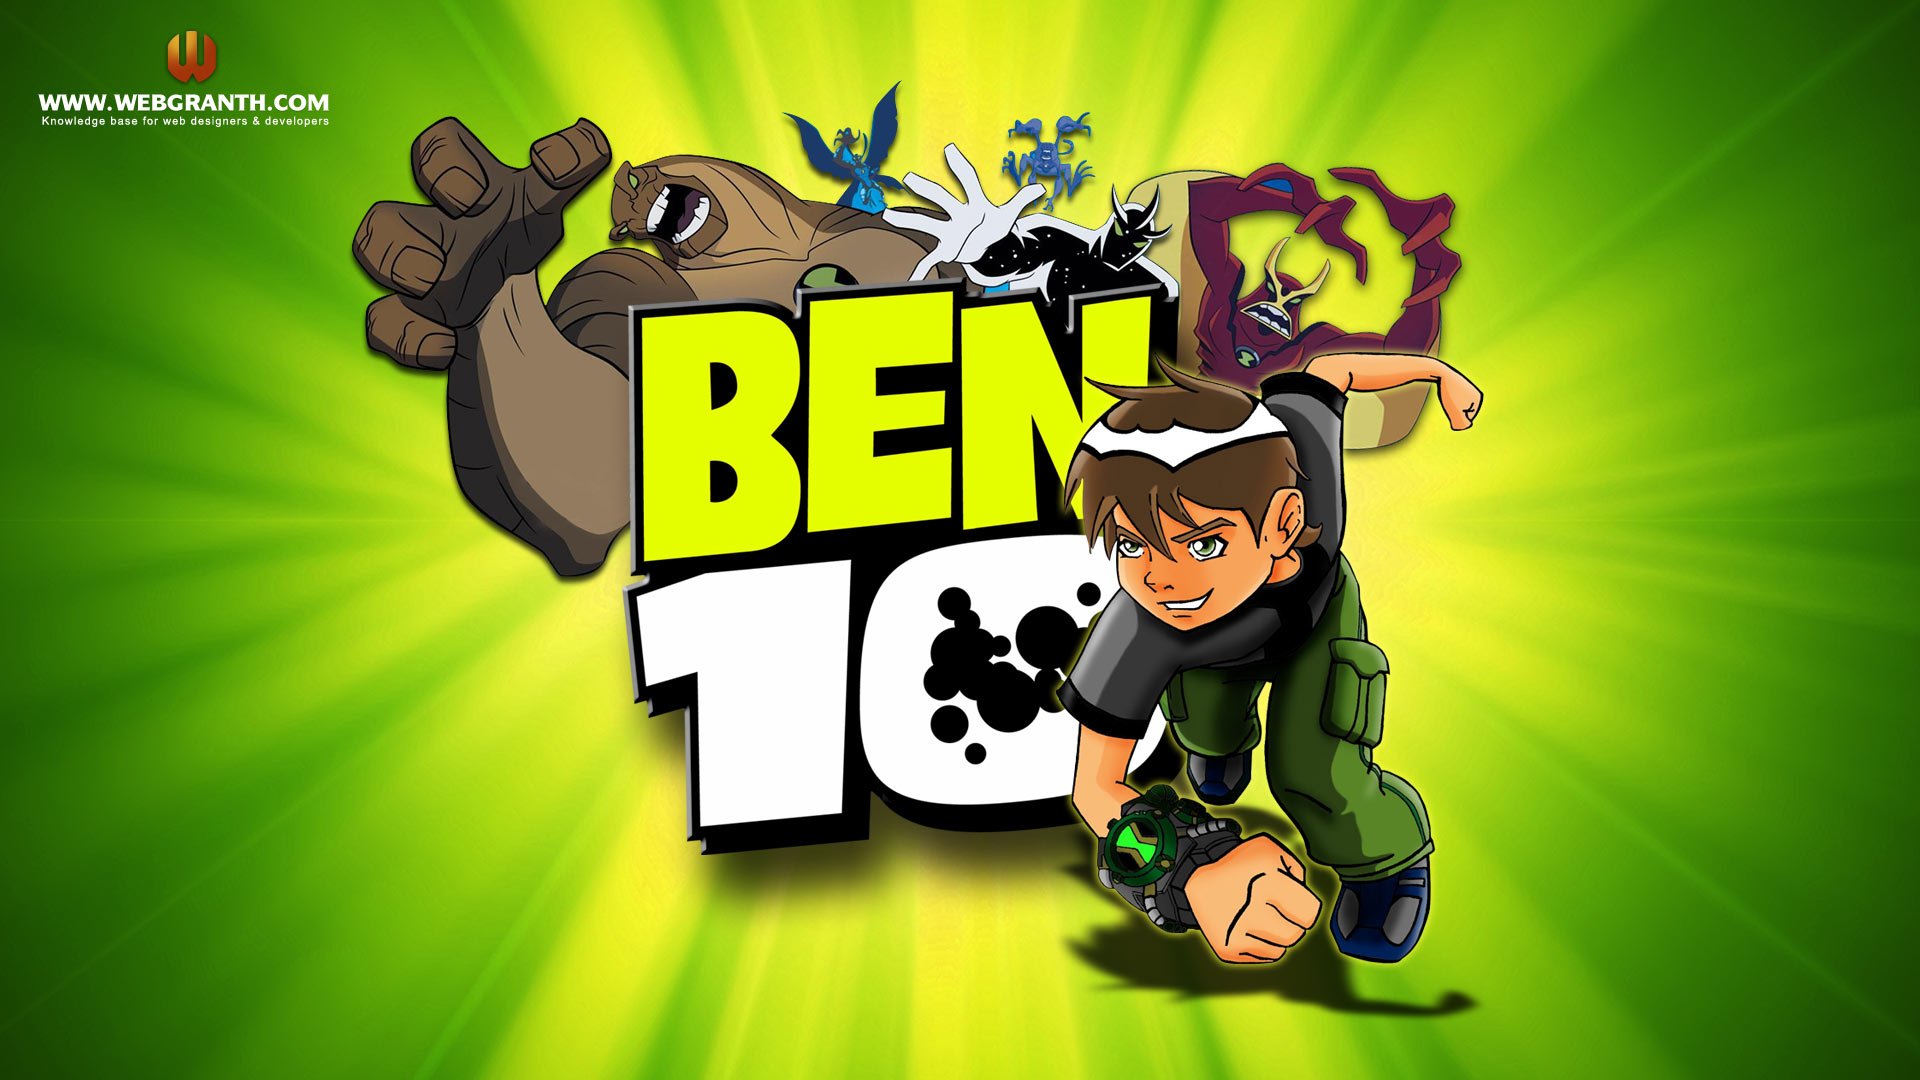 Ben Ten Wallpaper Png  Convite Do Ben 10  Free Transparent PNG Download   PNGkey